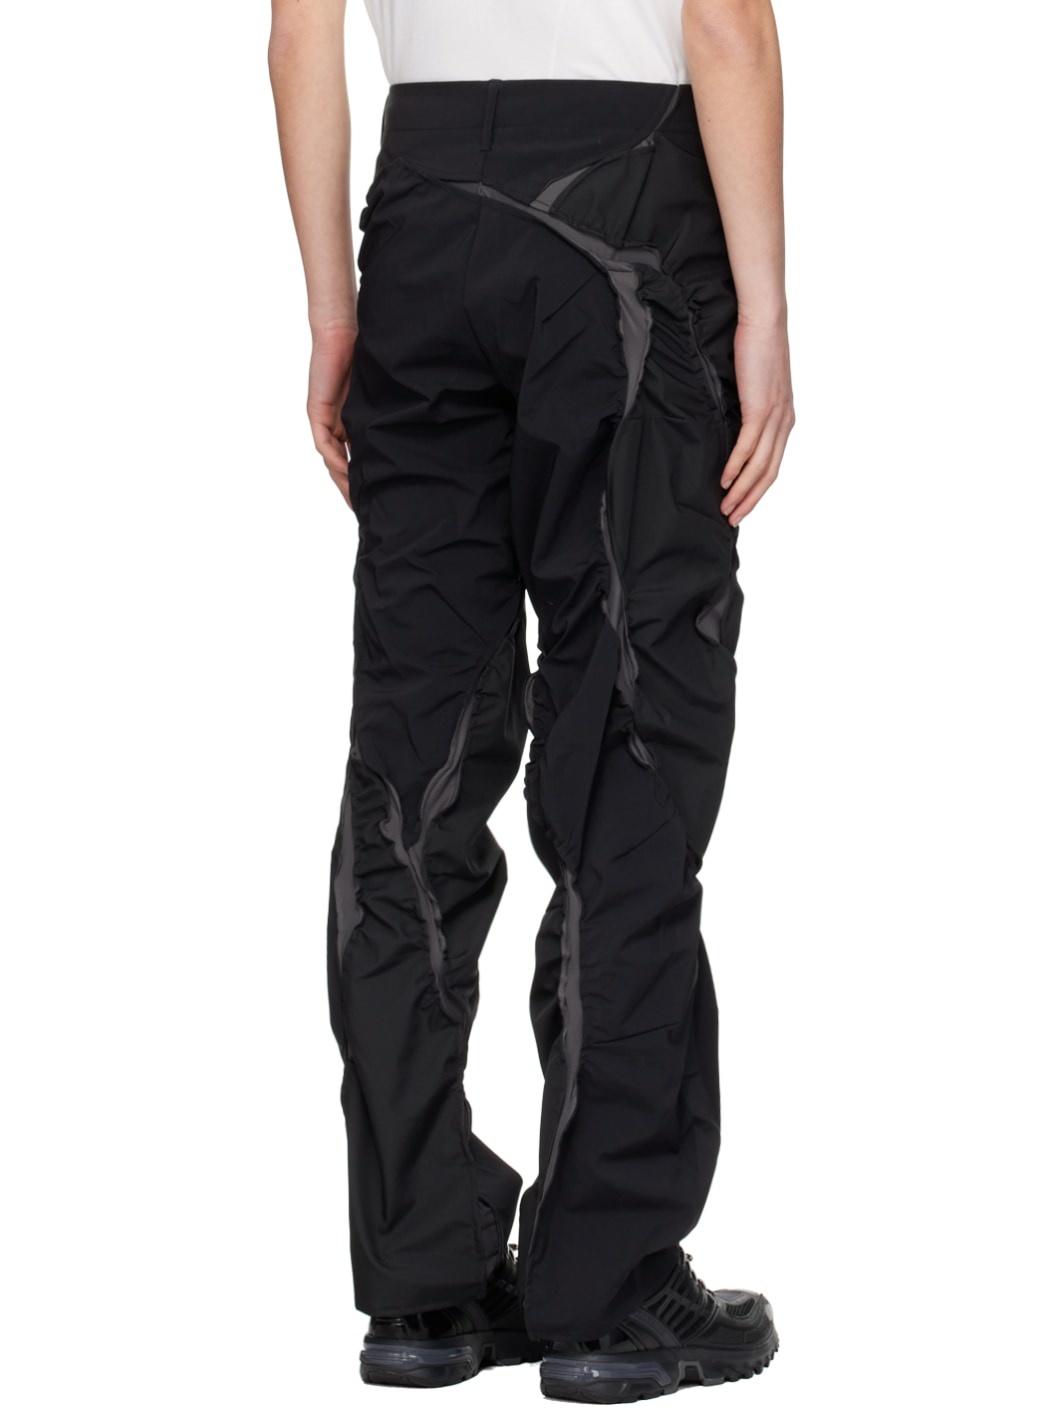 Black 6.0 Technical Left Trousers - 3